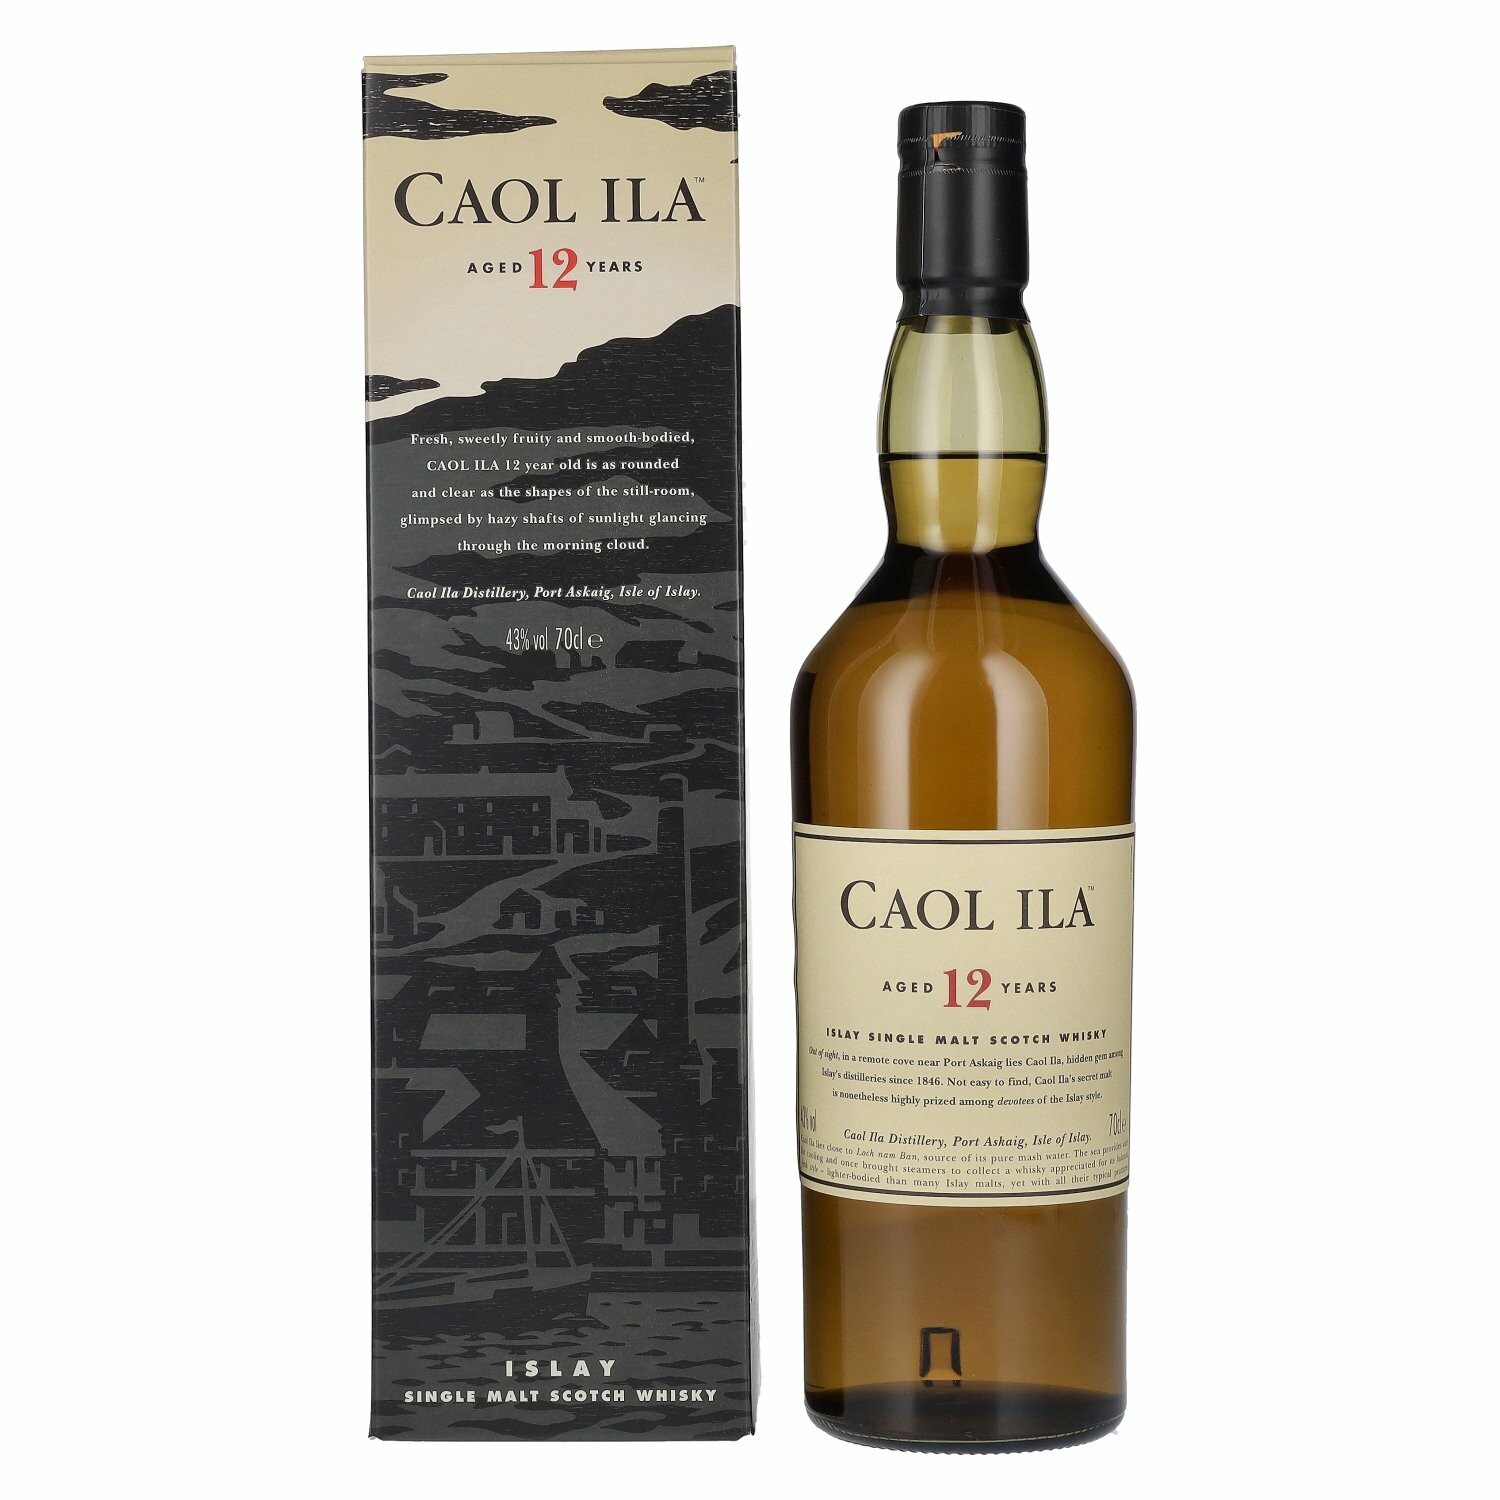 Caol Ila 12 Years Old Islay Single Malt 43% Vol. 0,7l in Giftbox